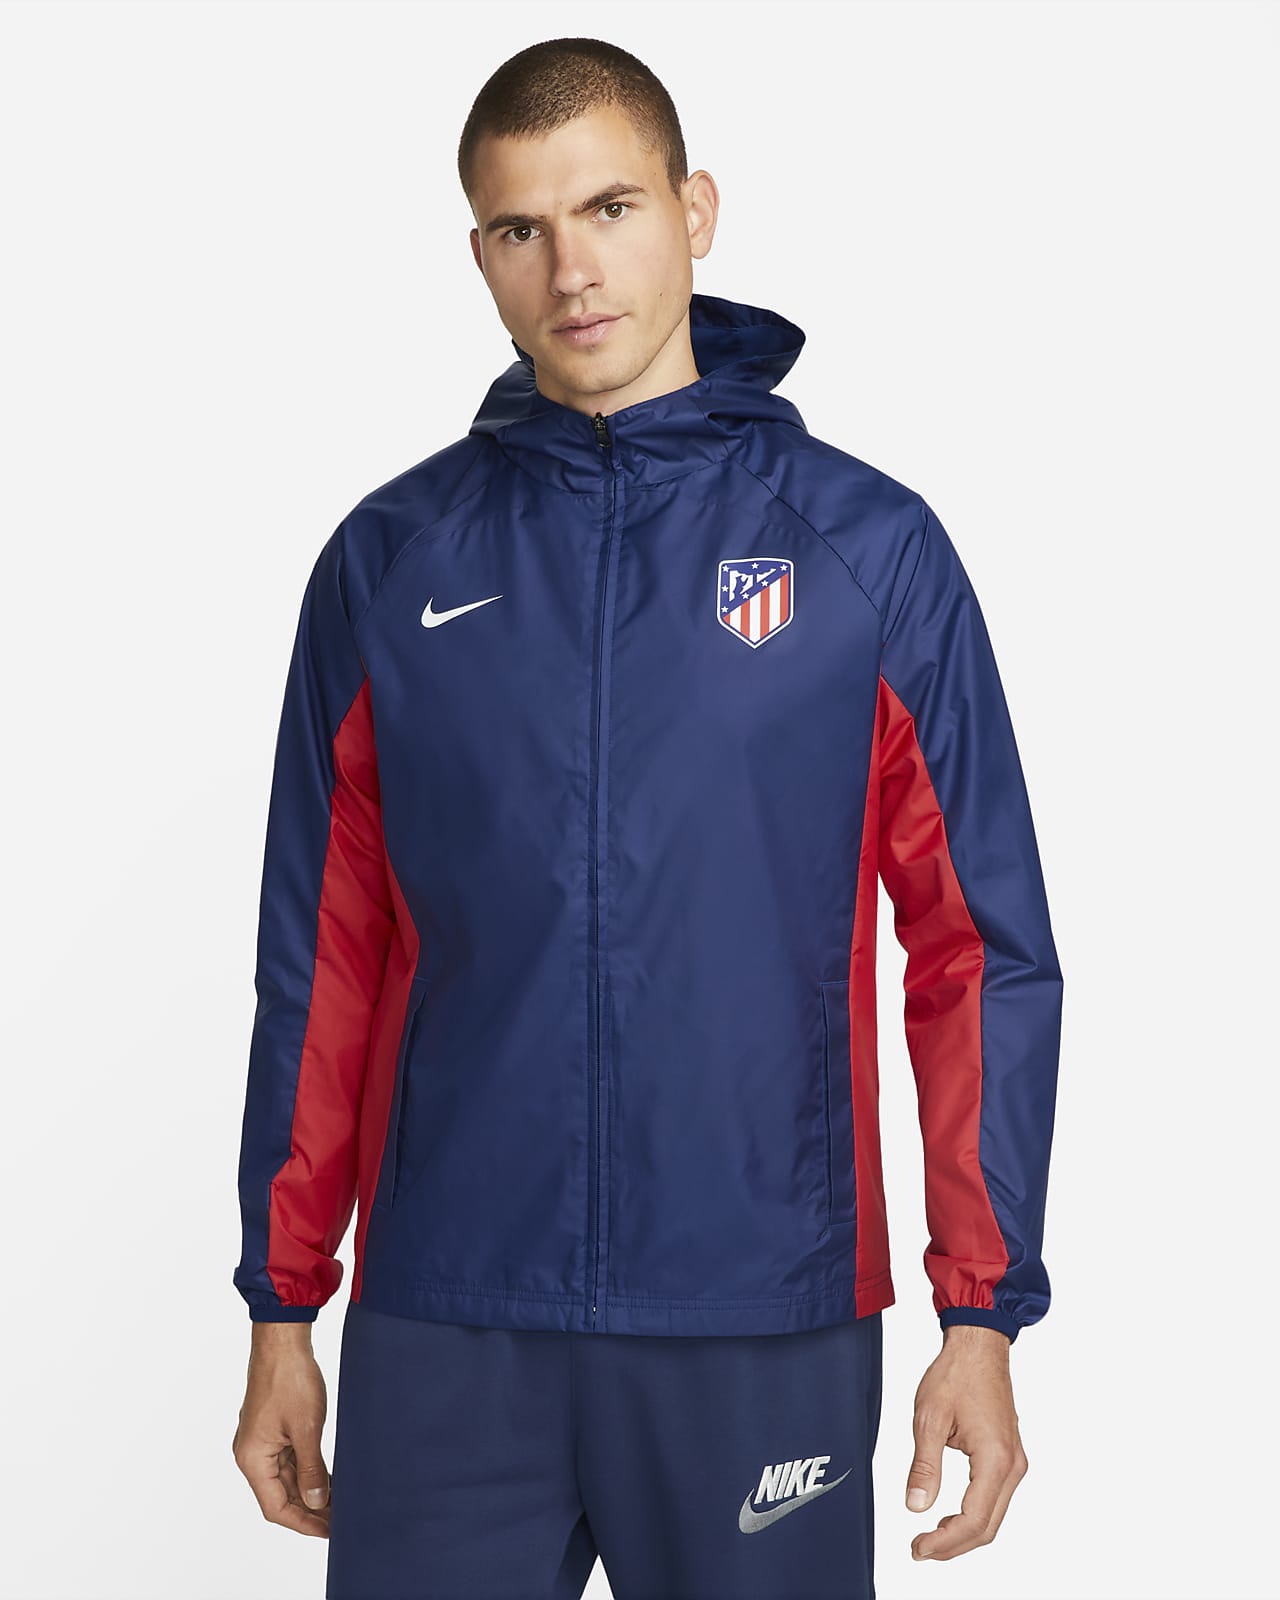 Atlético Madrid AWF Nike Fußball-Jacke für Herren